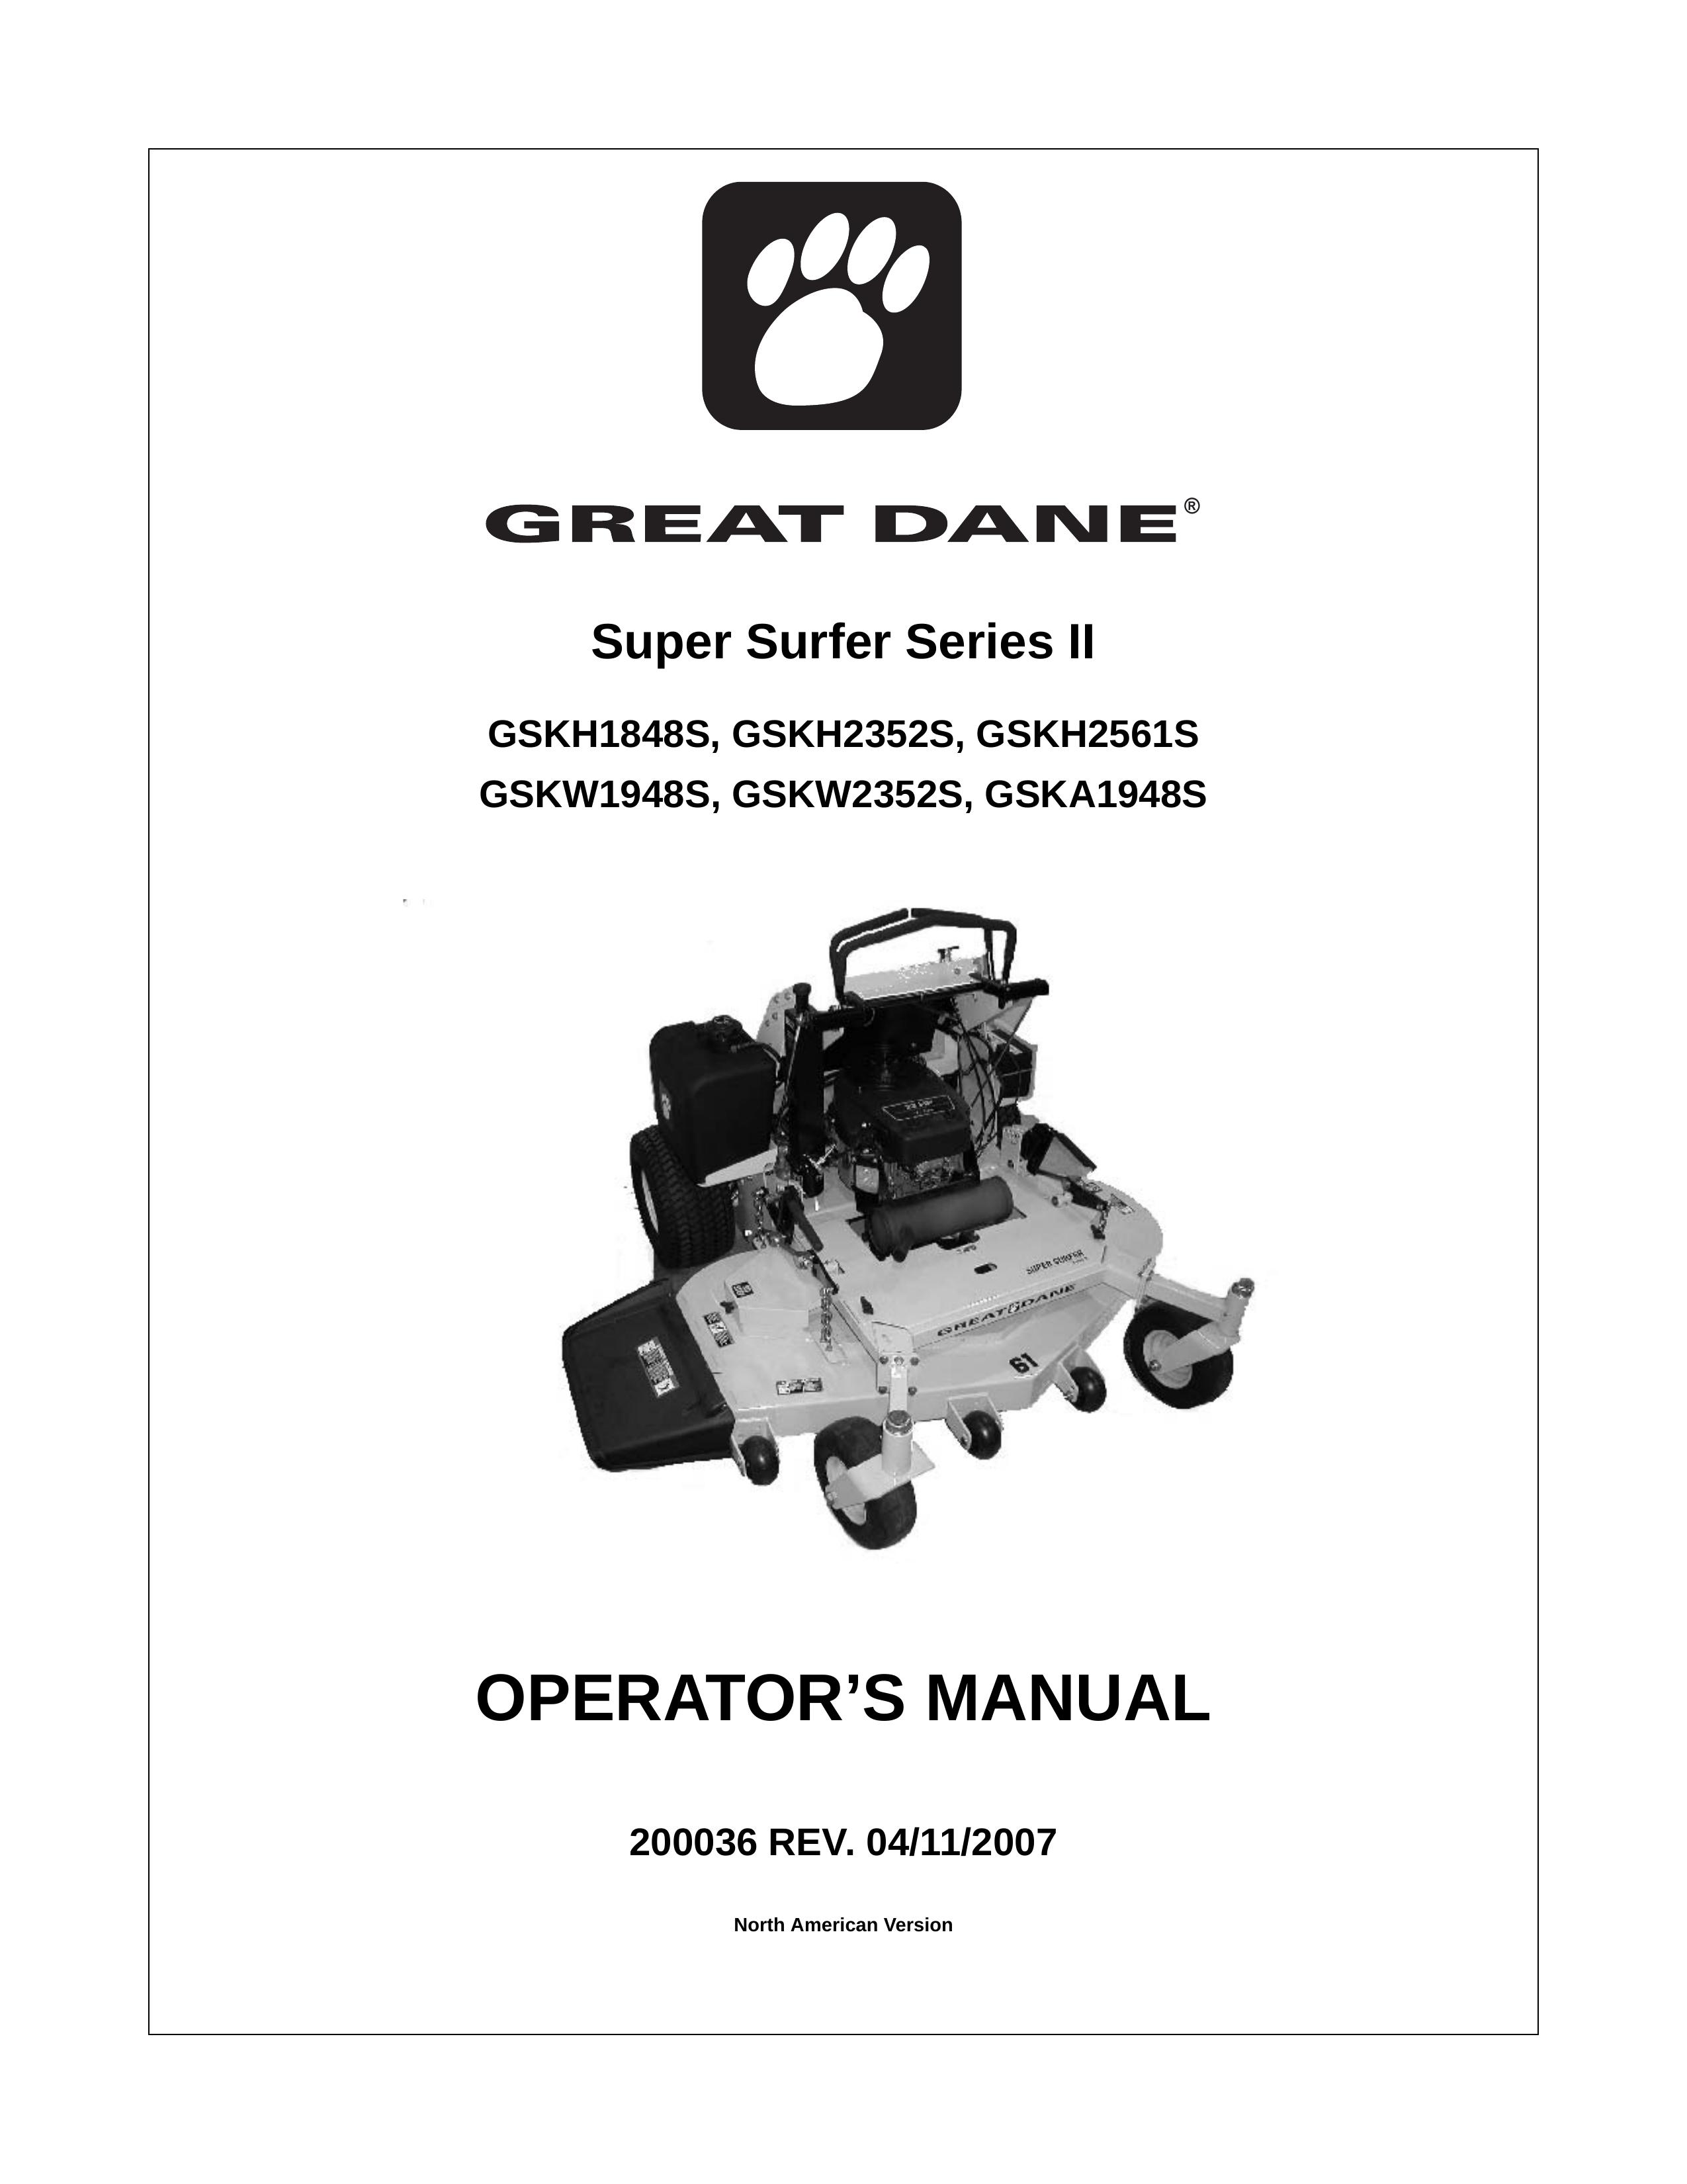 Great Dane GSKW1948S Lawn Mower User Manual